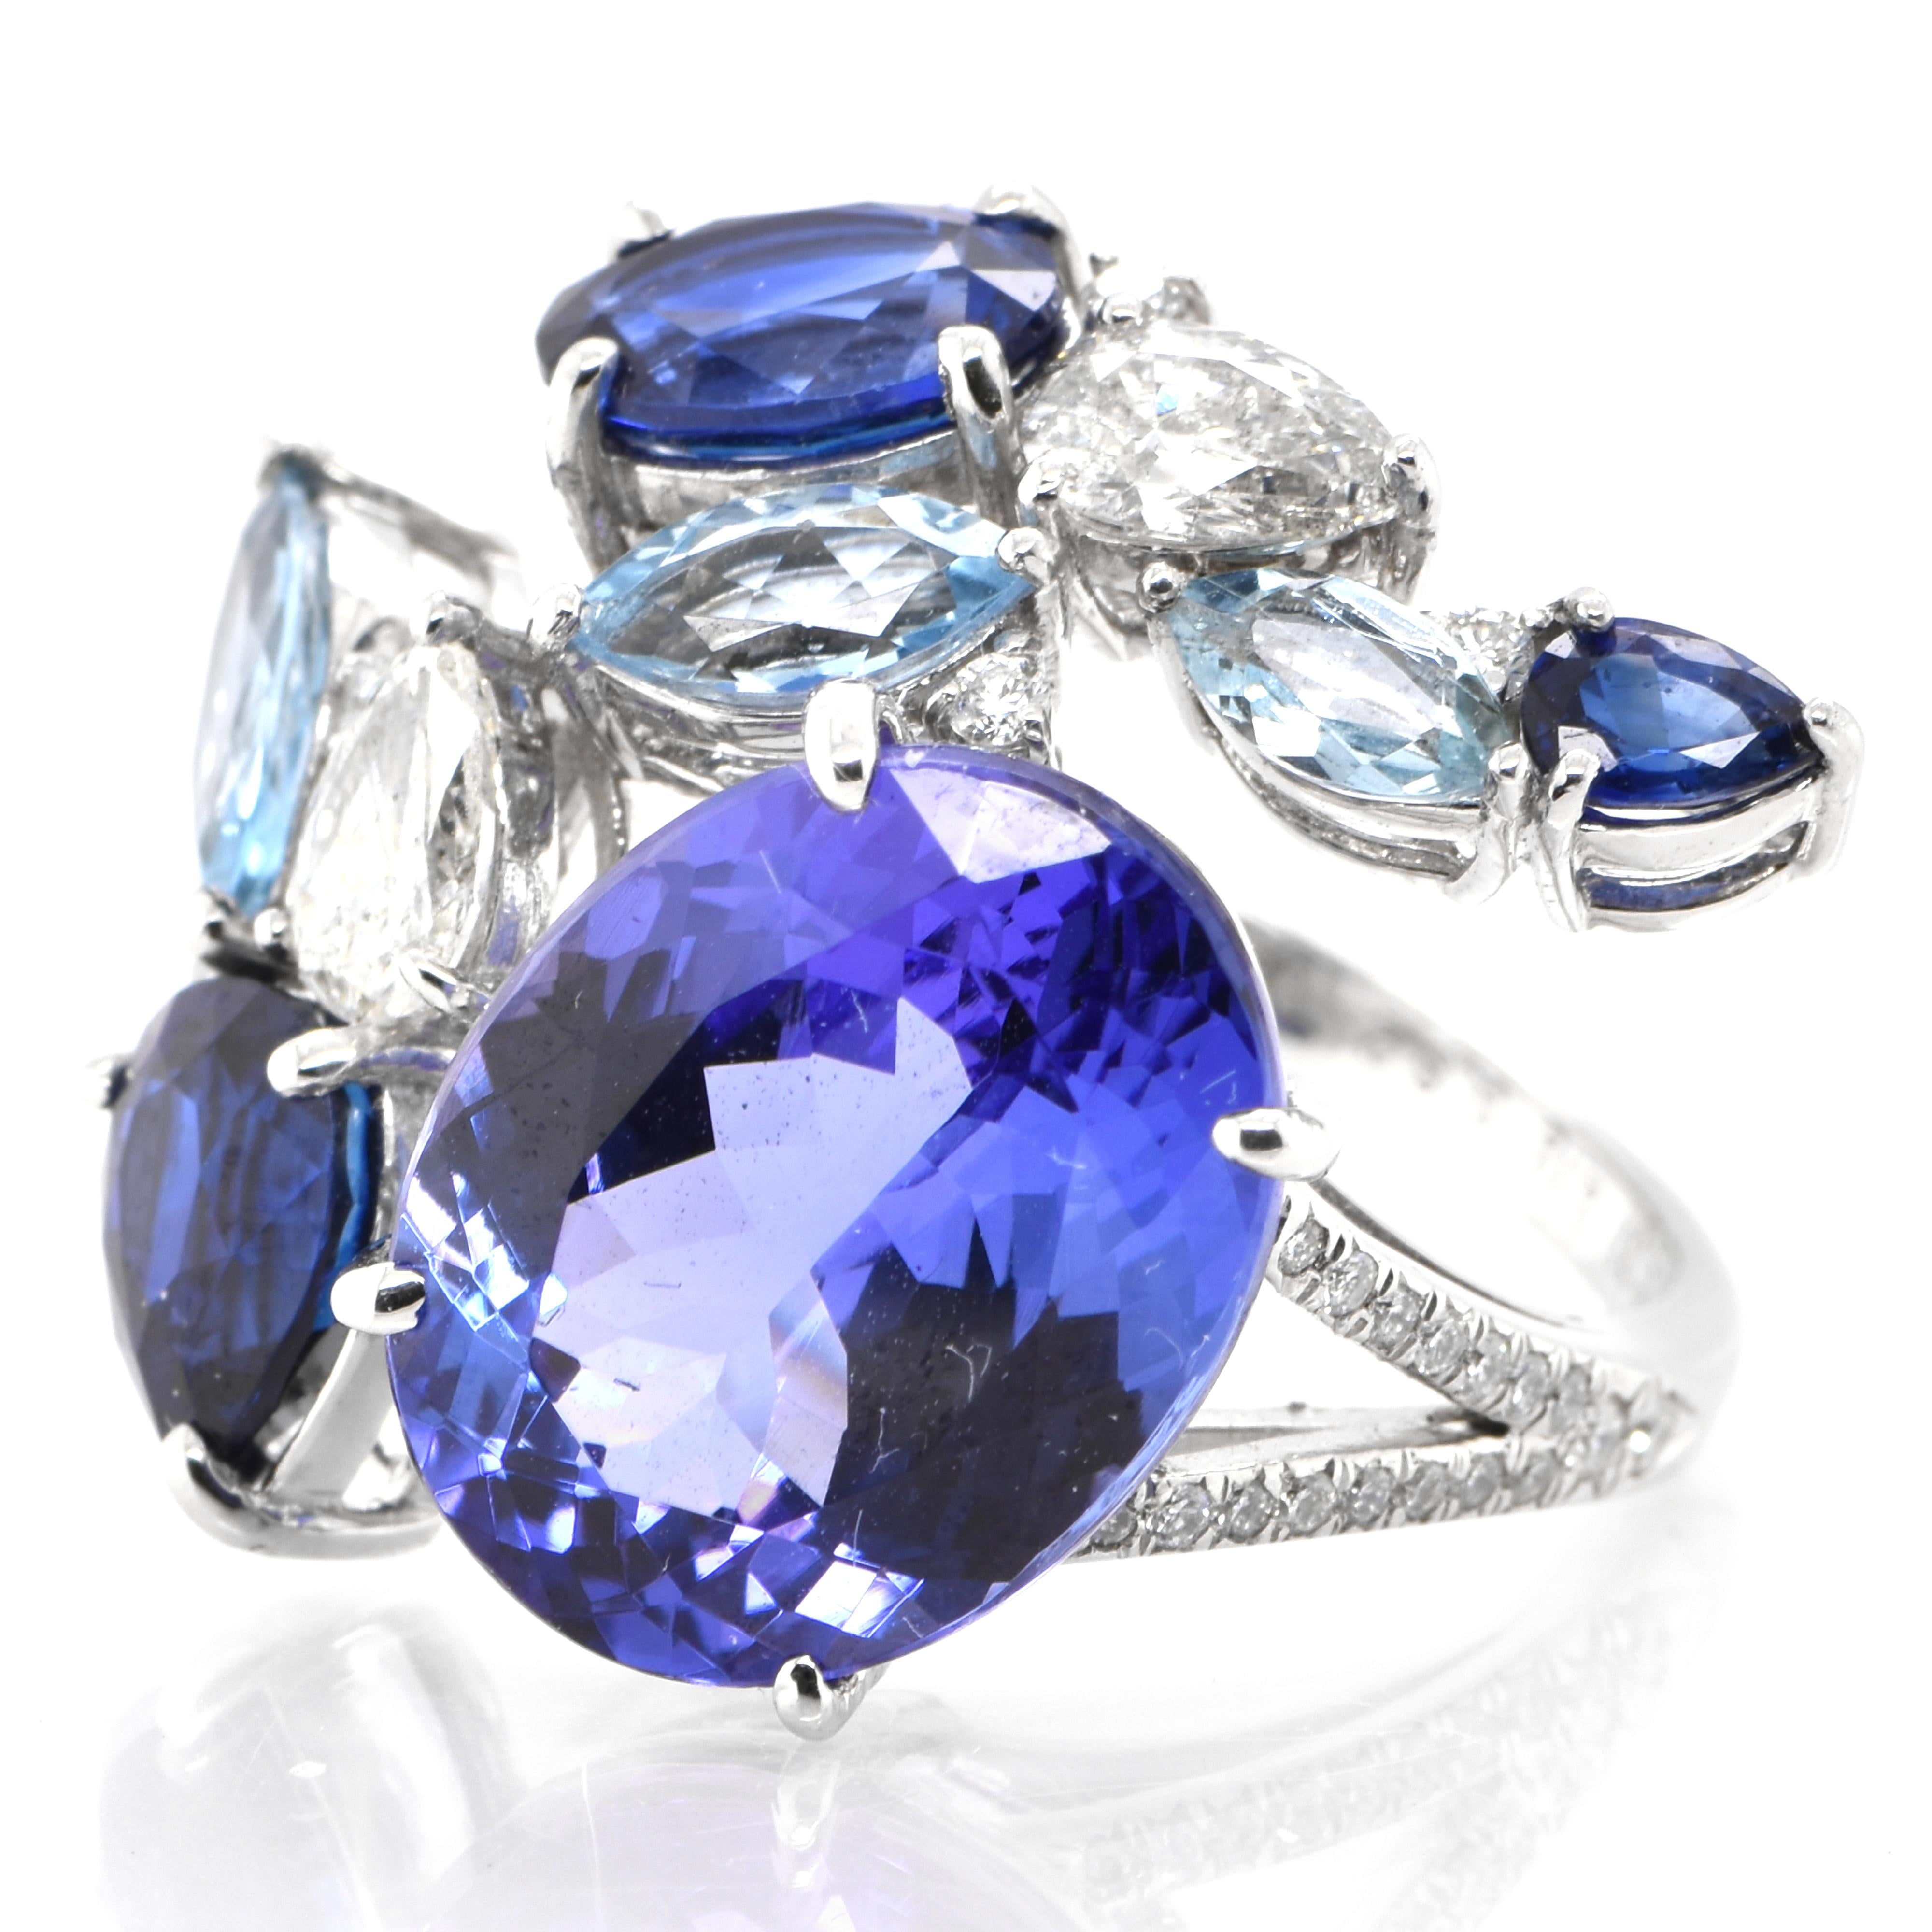 Oval Cut Natural Tanzanite, Sapphire, Aquamarine & Diamond Cocktail Ring Set in Platinum